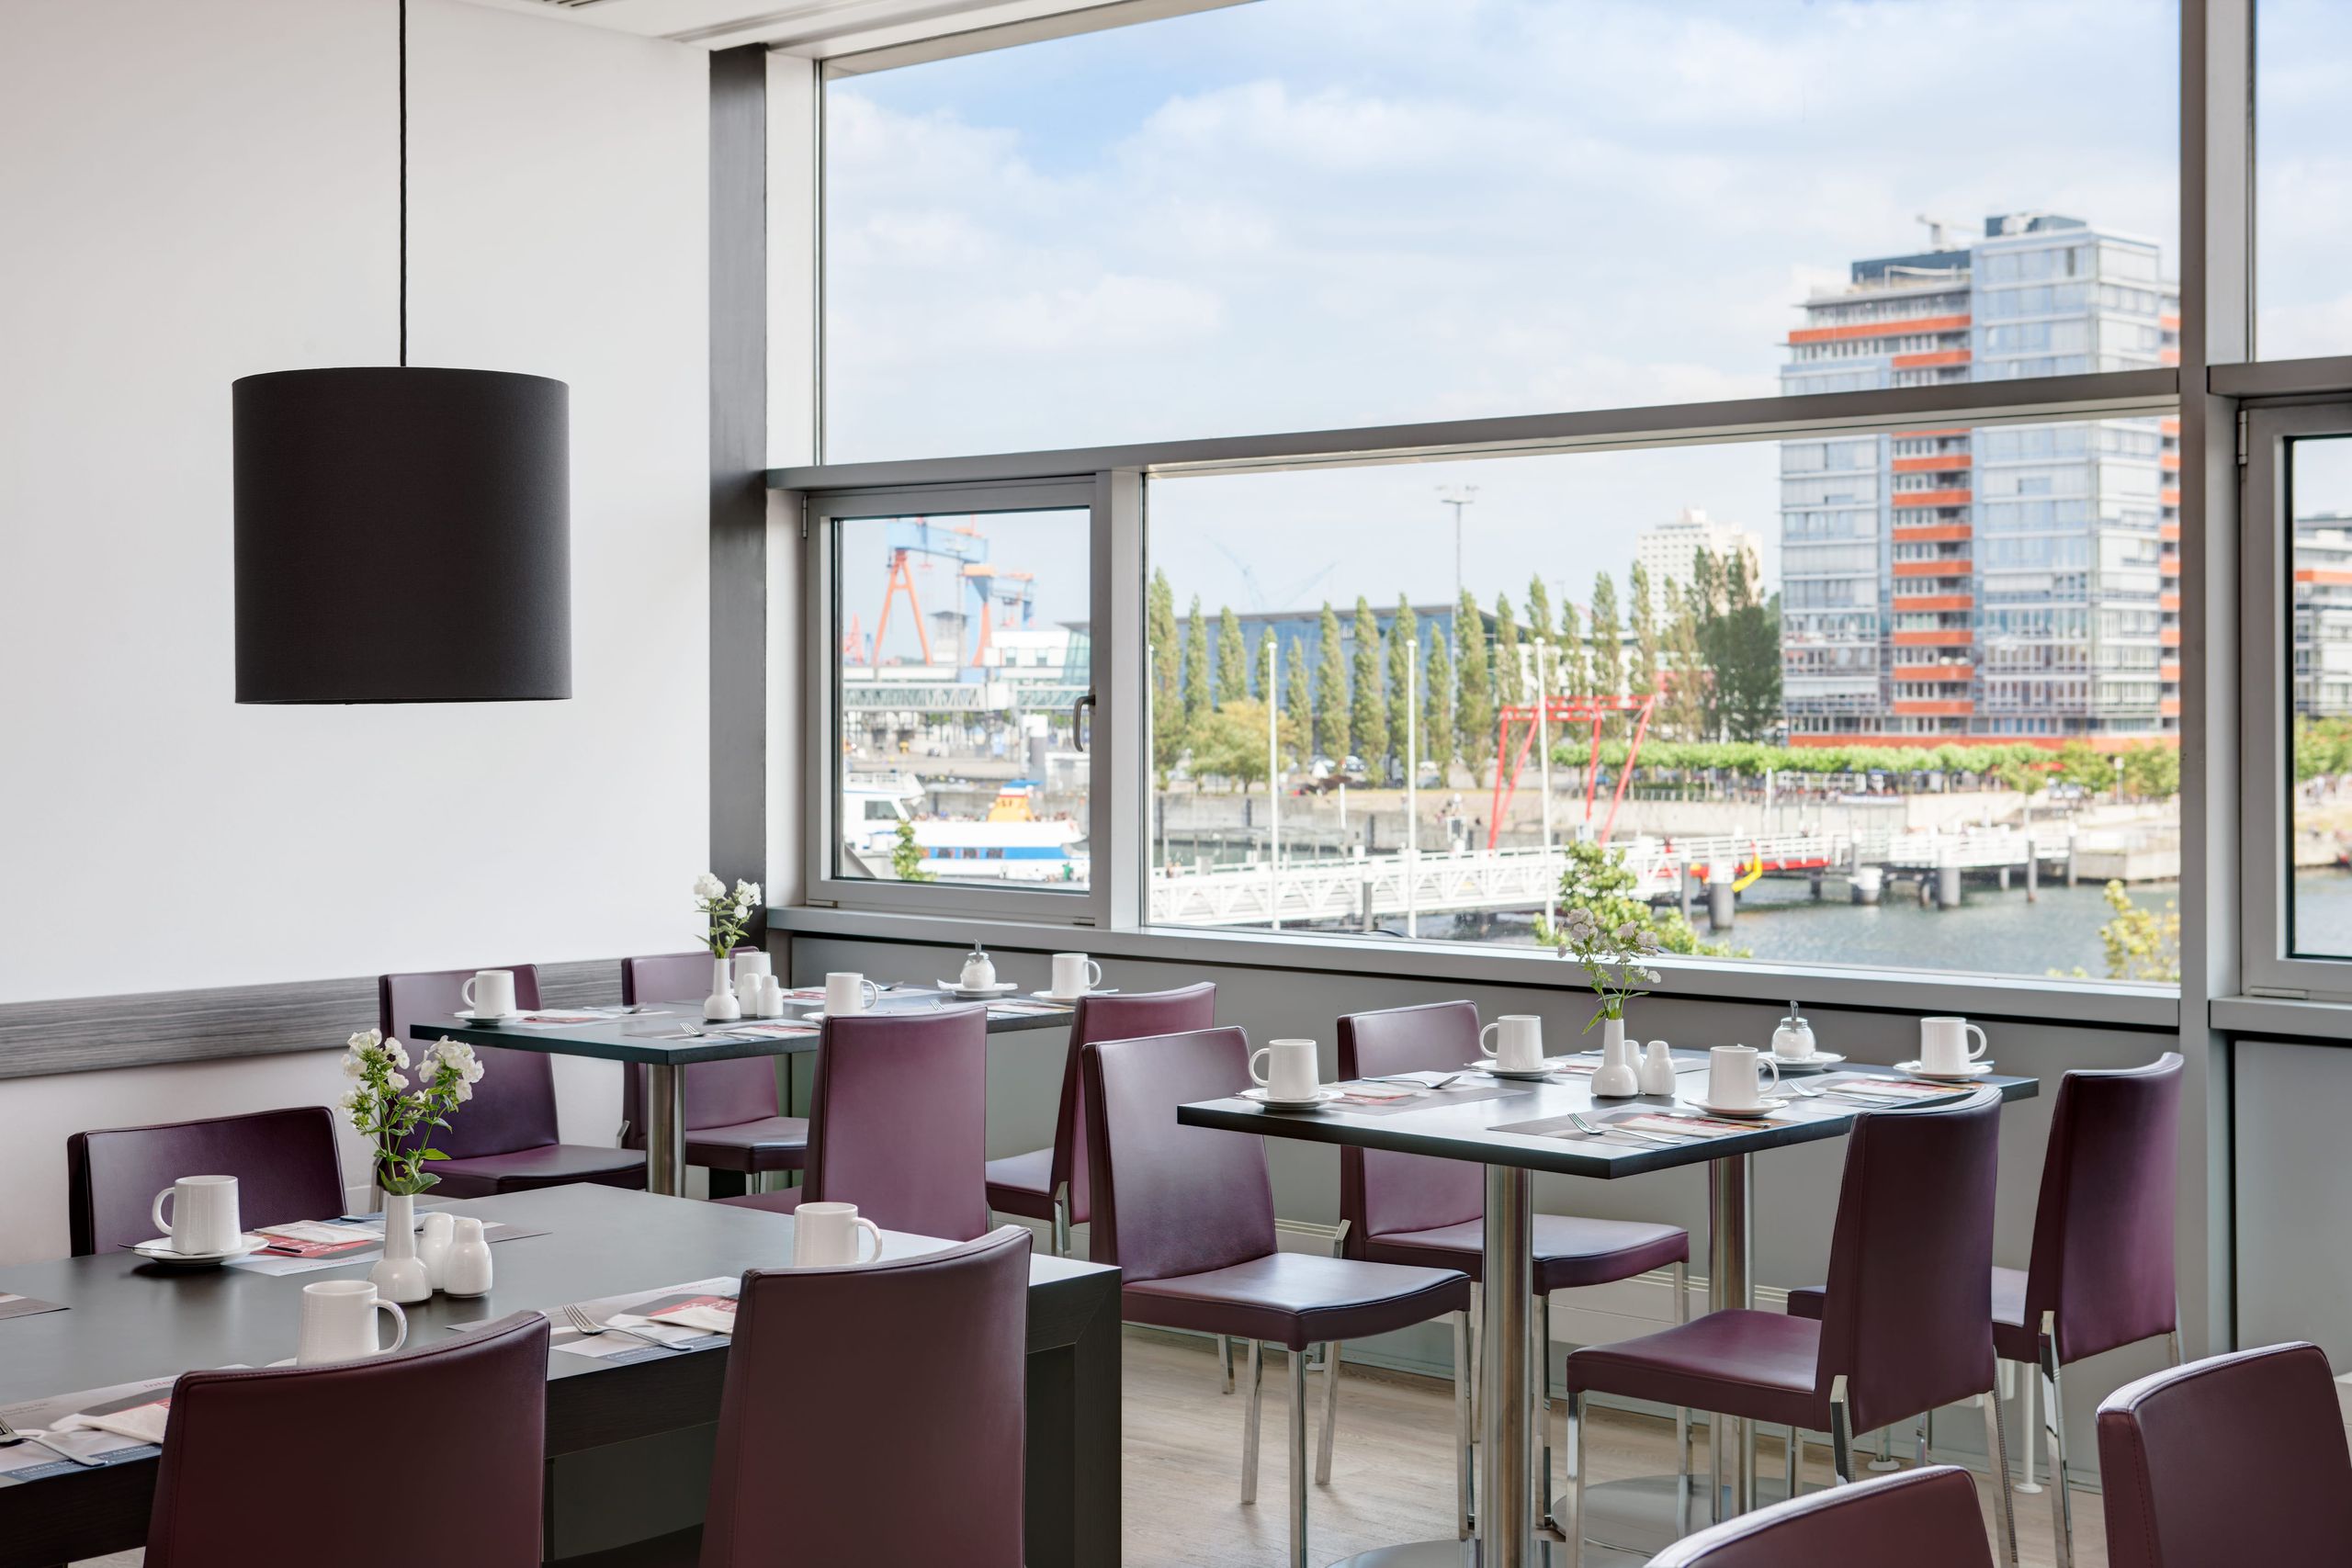 IntercityHotel Kiel - restaurant